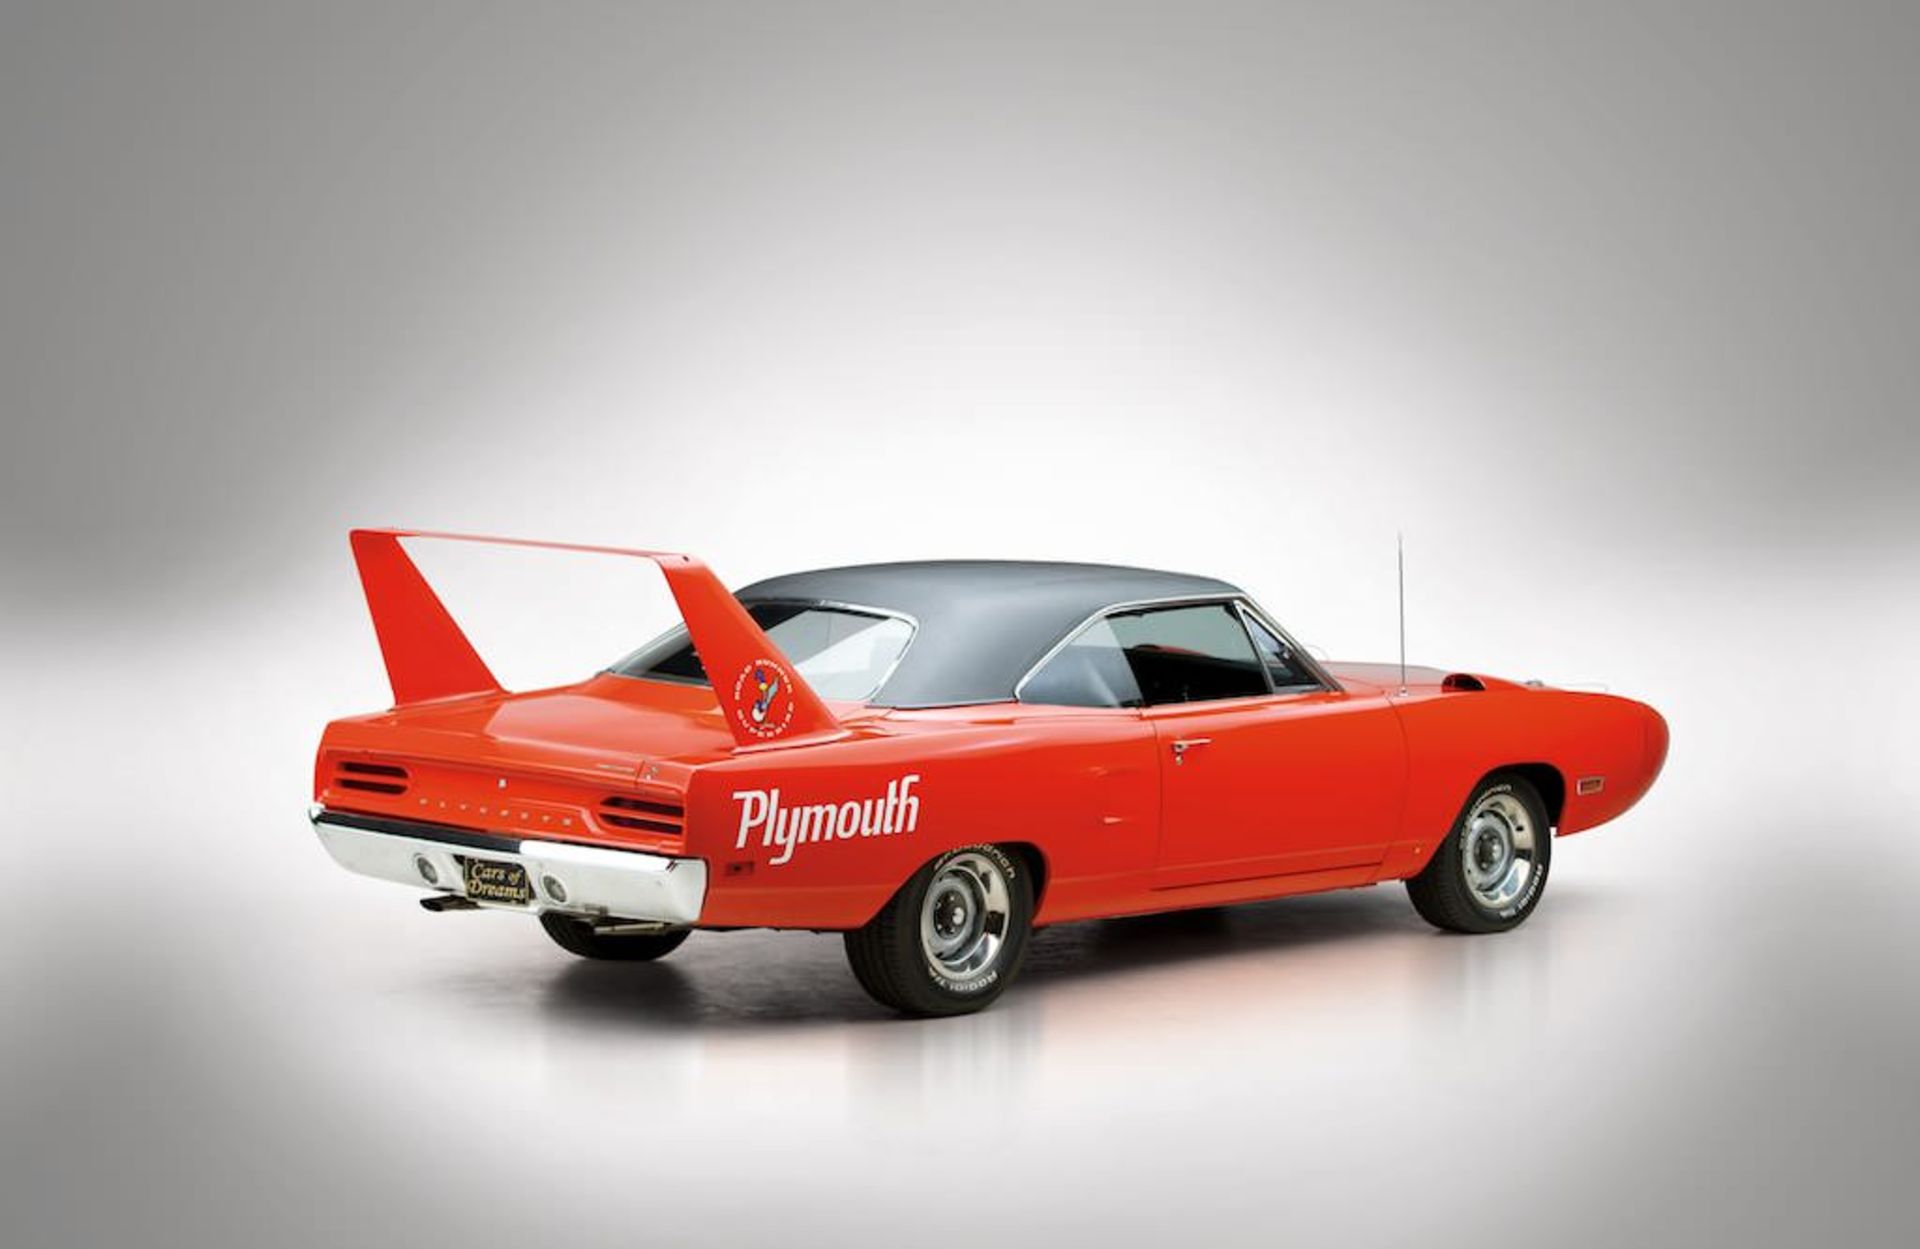 پلیموث سوپربرد / Plymouth Superbird